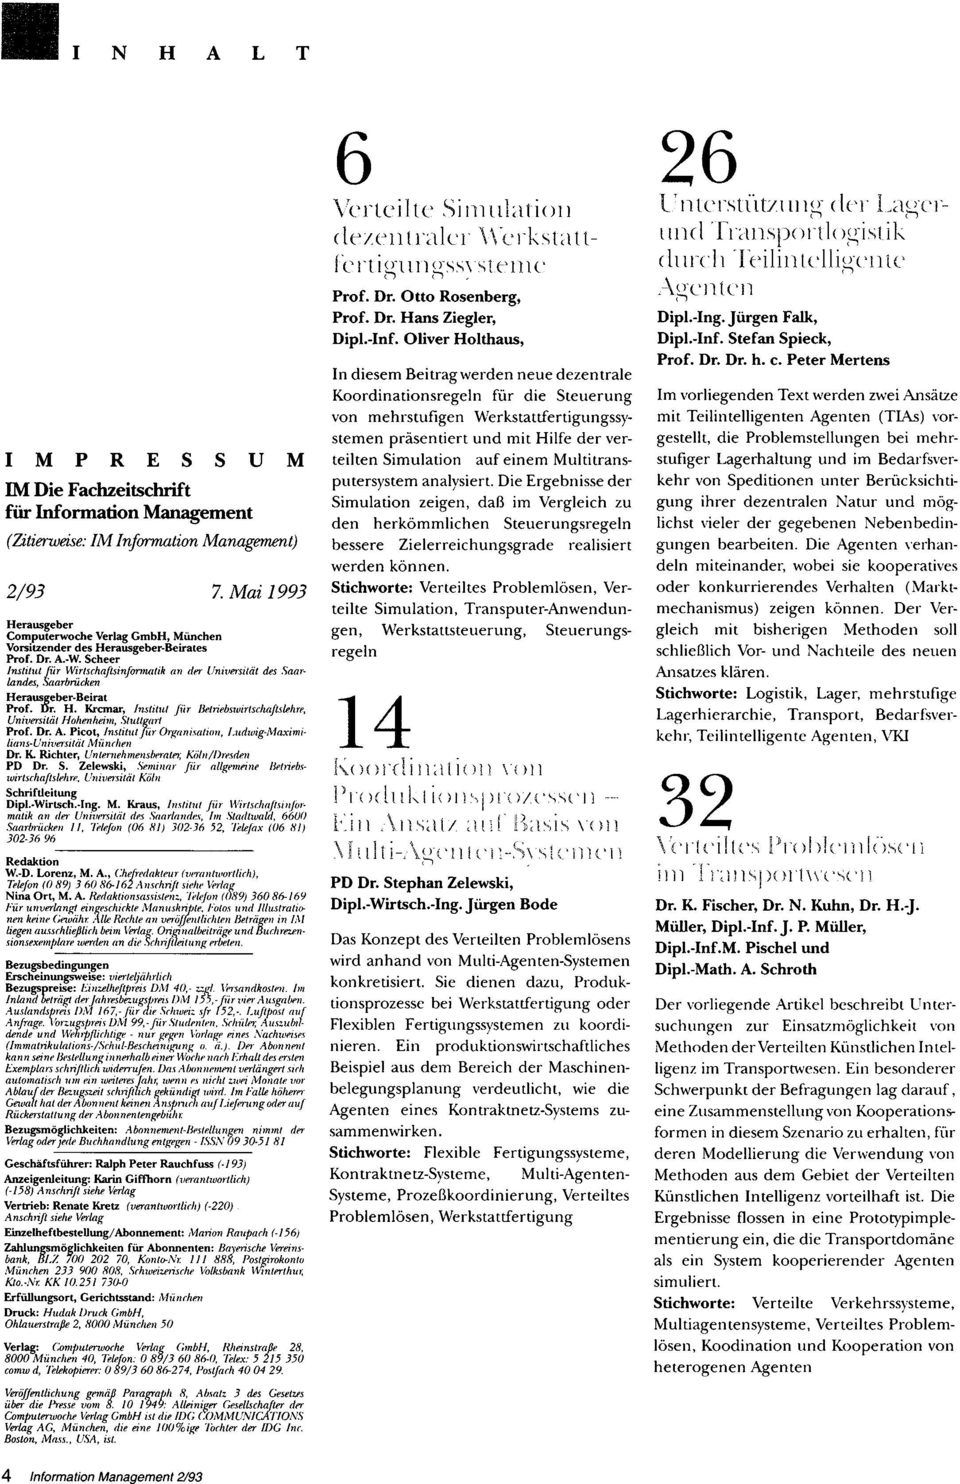 Dr. A. Picot, Institut für Organisation, Ludwig-Maximilians- Universitai München Dr. K. Richter, Unternehmensberater, Köln/Dresden PD Dr. S.